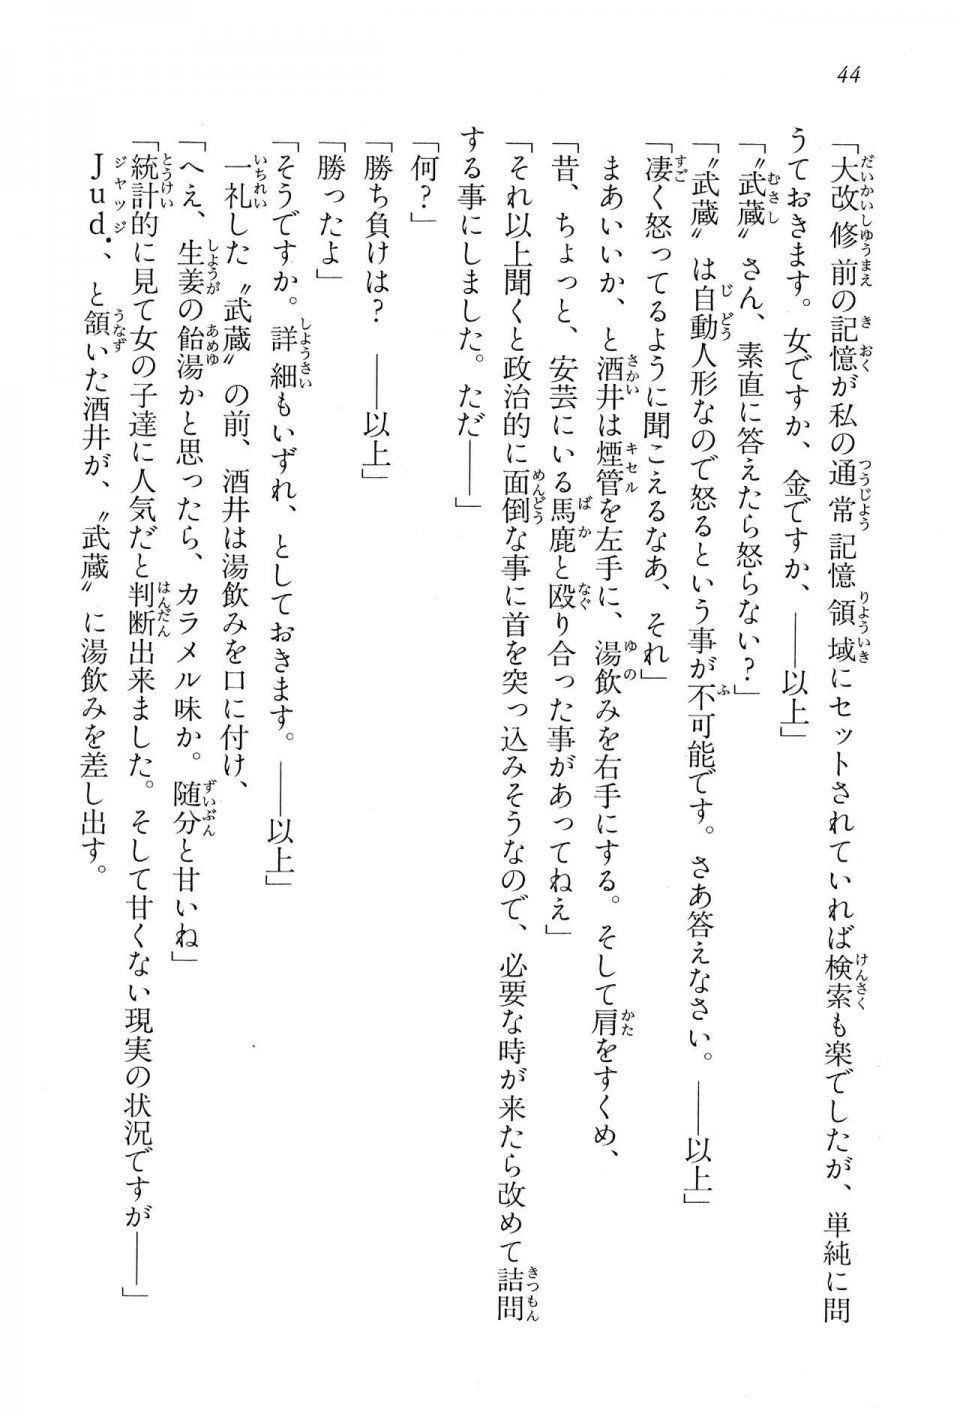 Kyoukai Senjou no Horizon BD Special Mininovel Vol 1(1A) - Photo #48